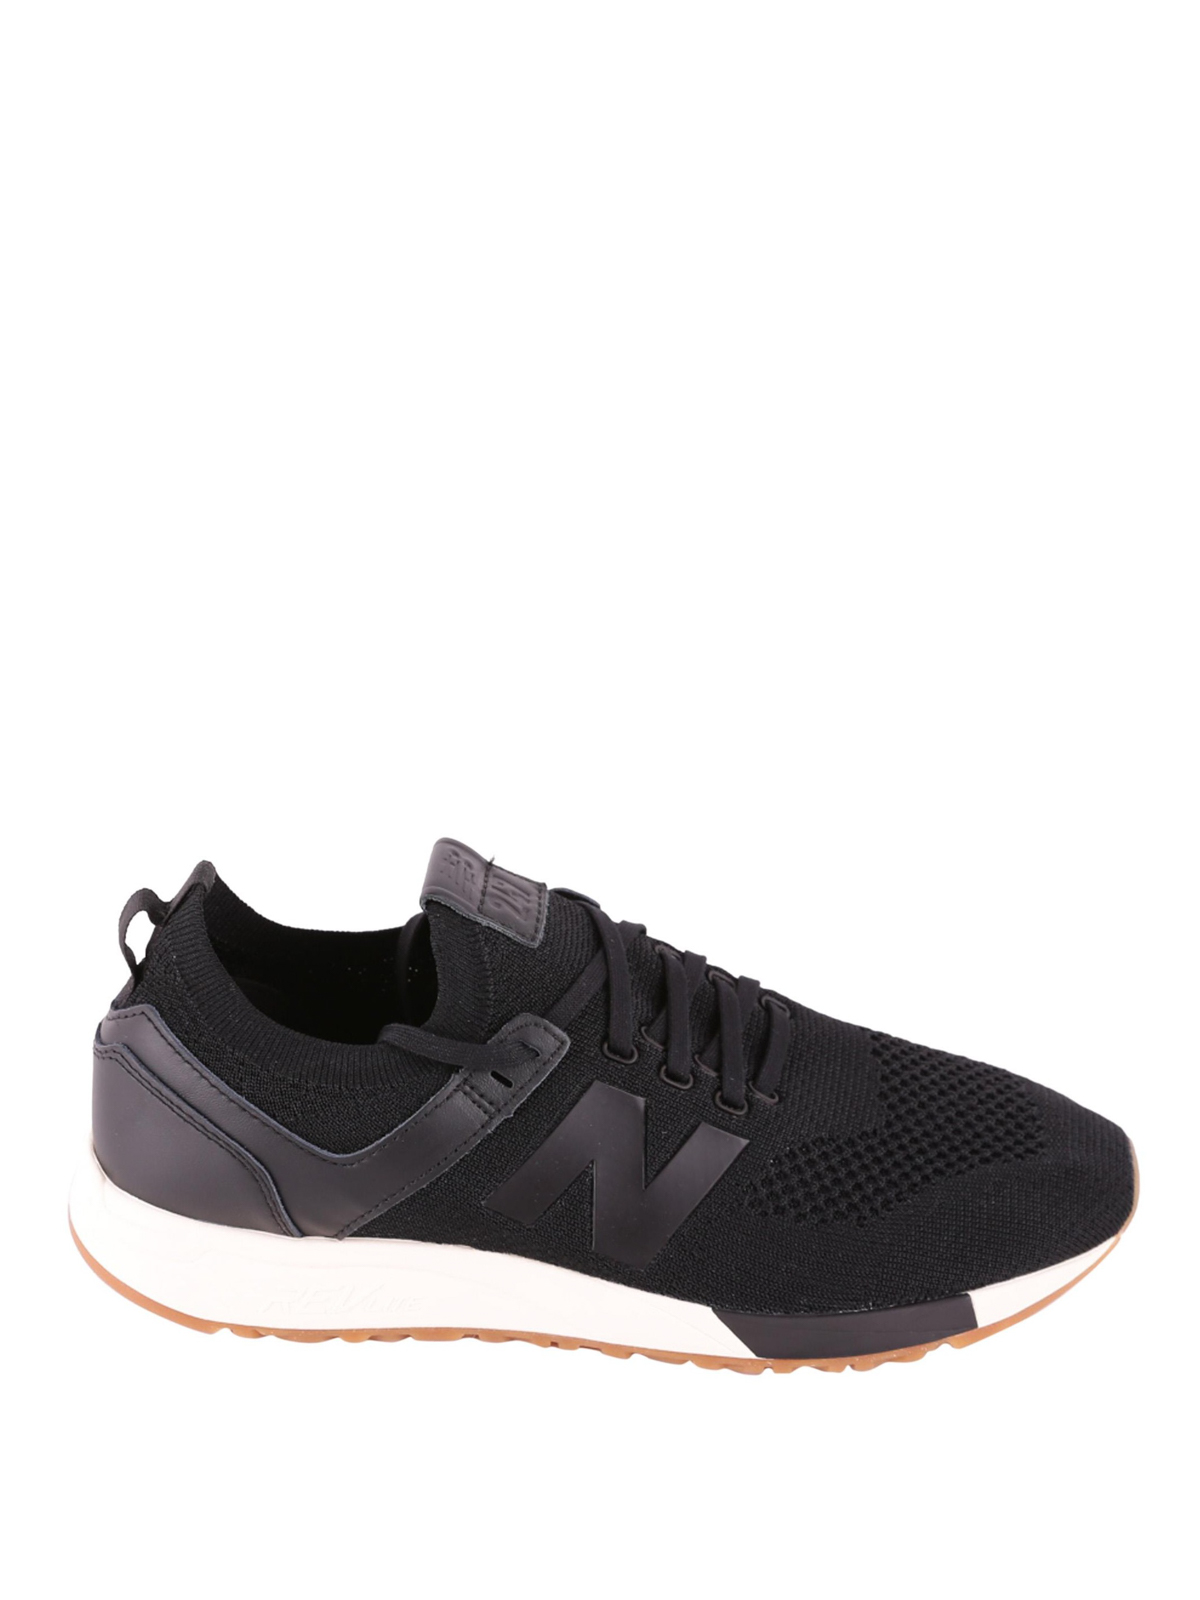 appel Editie Smeren Trainers New Balance - 247 Decon black sneakers - MRL247DB